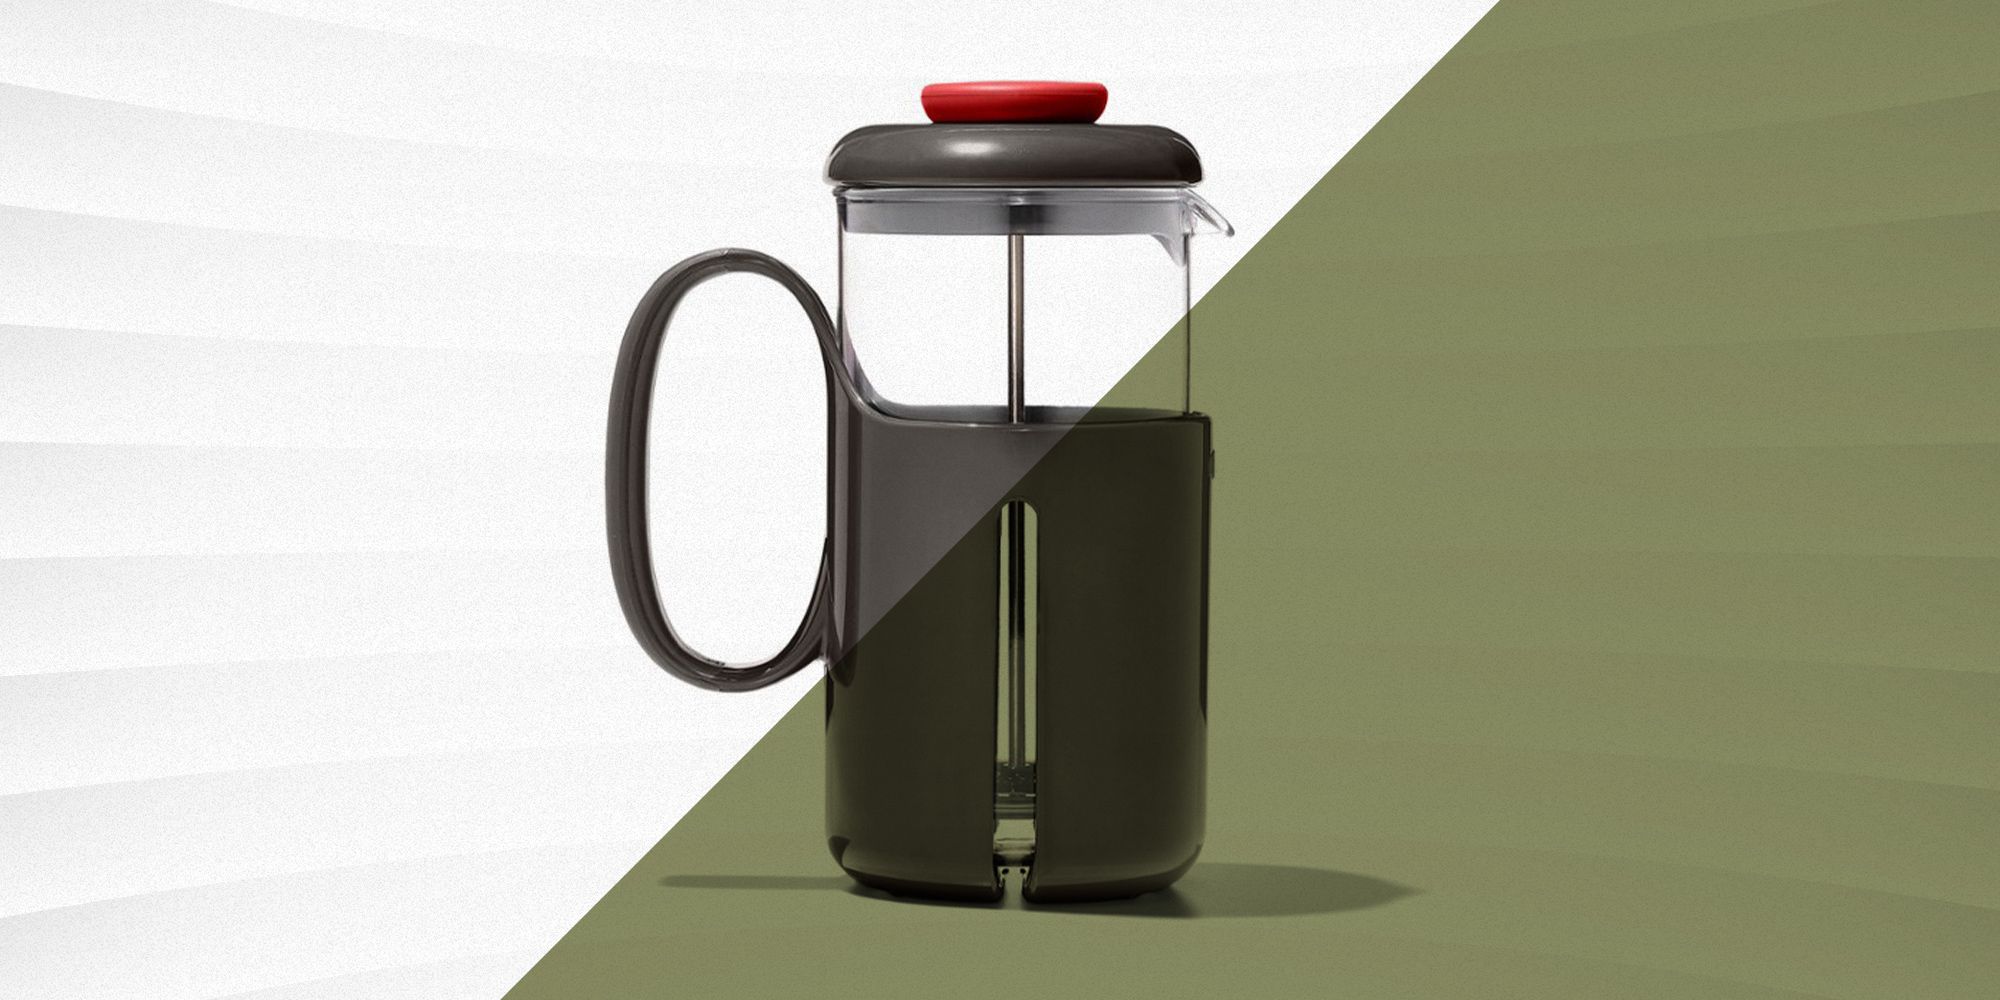 Black & Decker 12 Cup Programmable Gray Coffee Maker - Bender